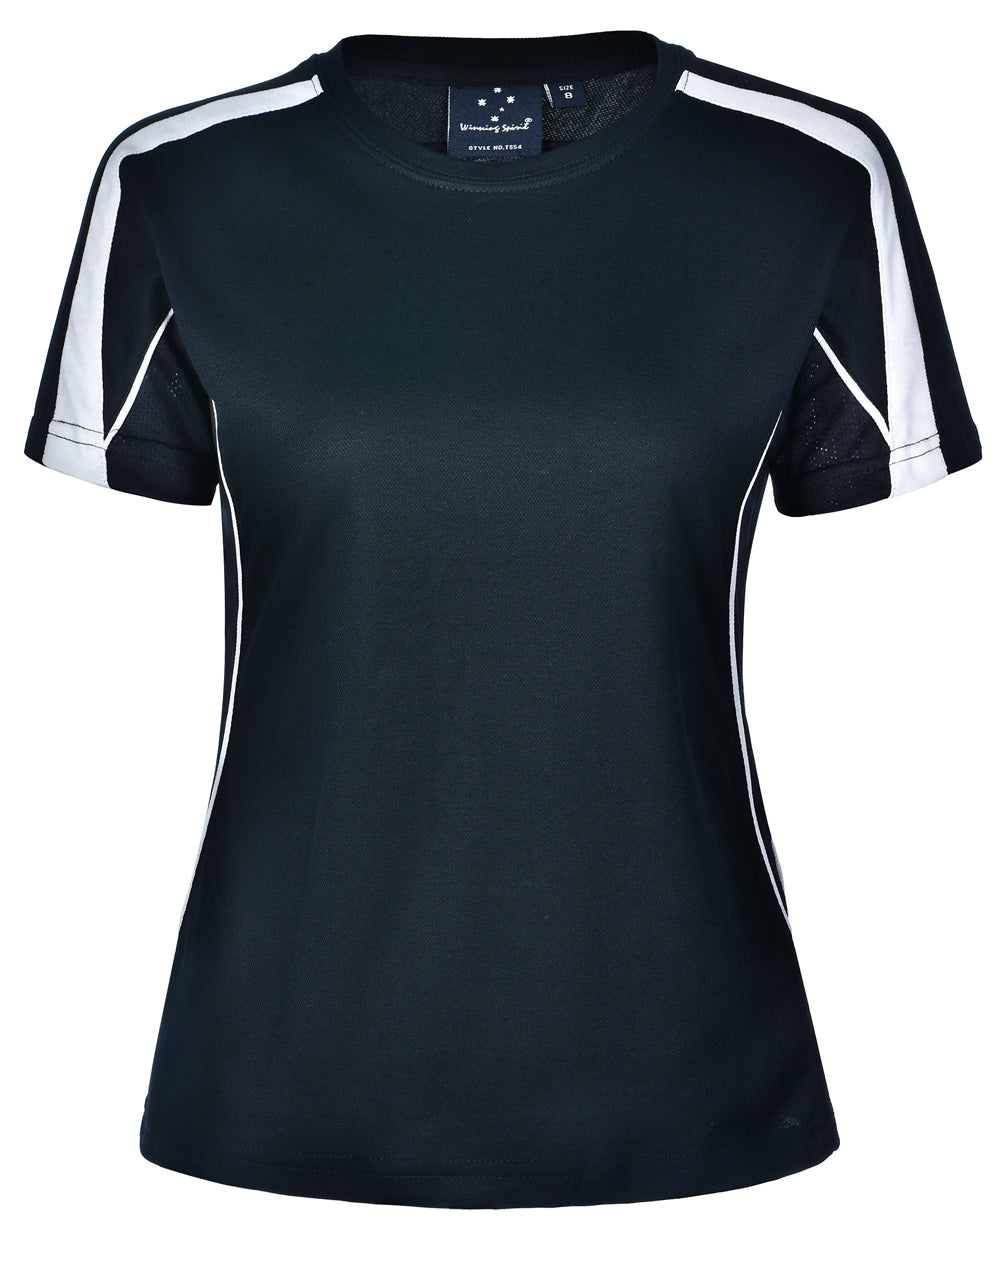 Winning Spirit Ladies' Truedry Short Sleeve Fashion Tee Shirt (TS54) 2nd color